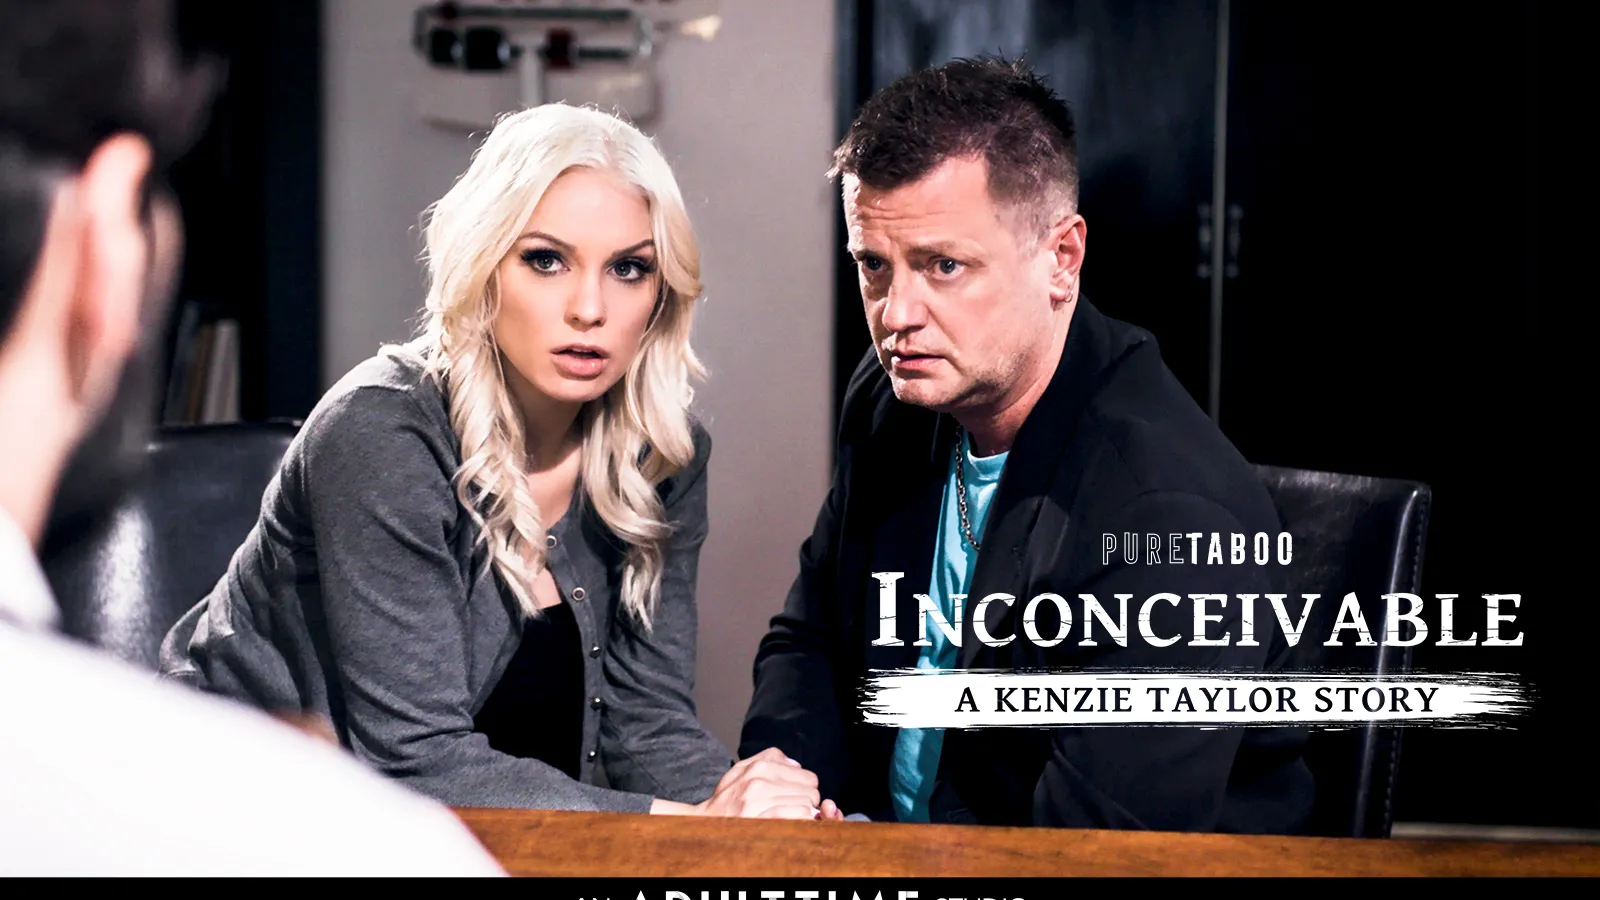 Avsubtitles English Subtitles For [puretaboo] Inconceivable A Kenzie Taylor Story